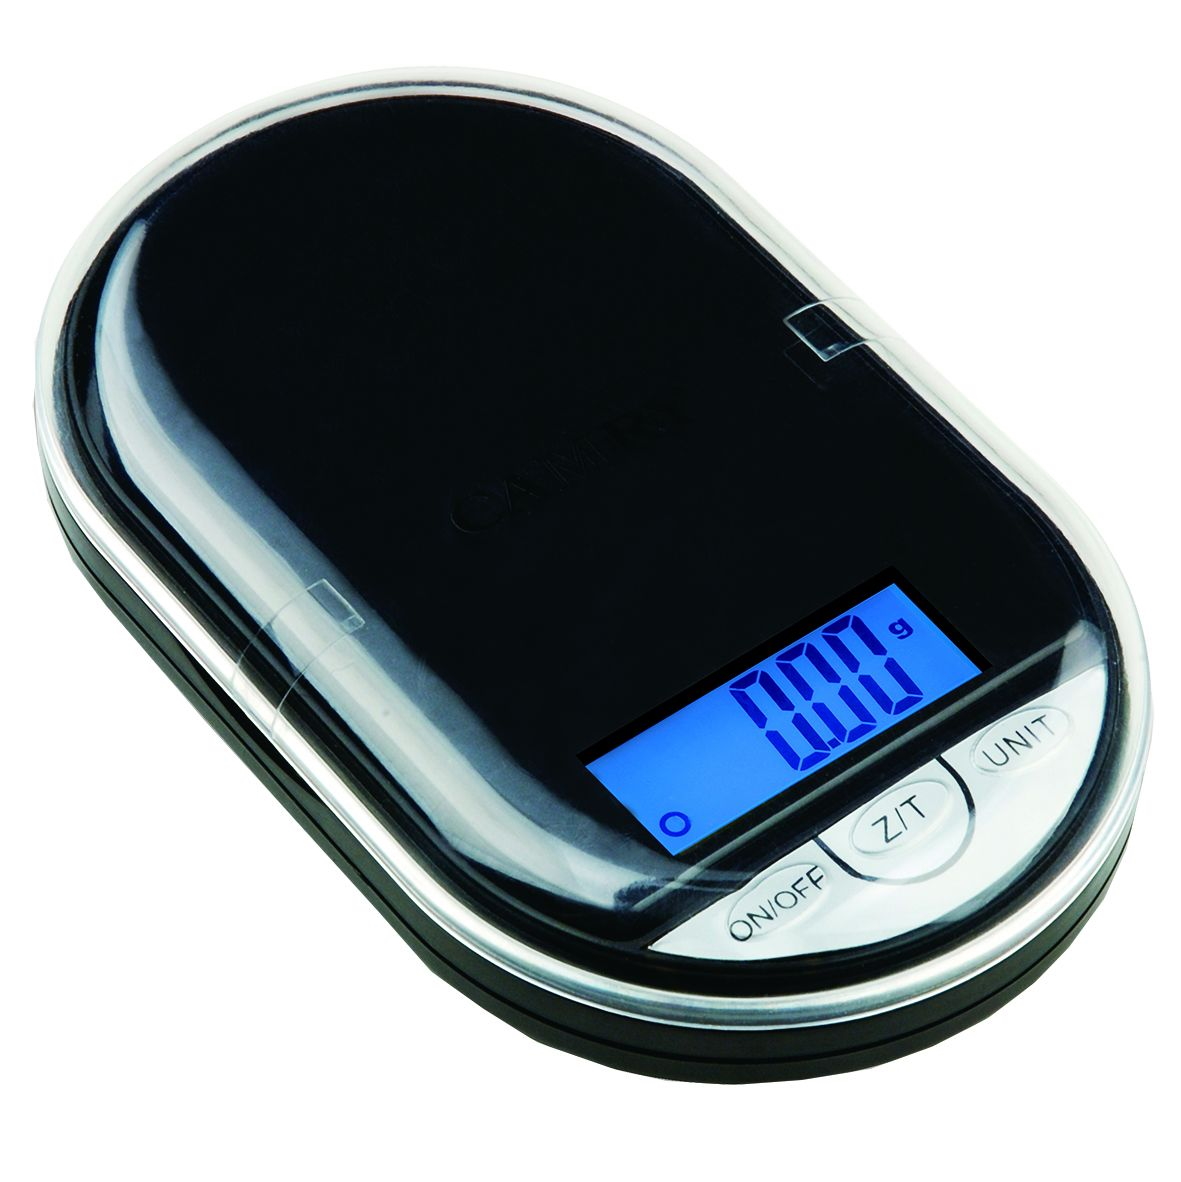 Acurite Pocket Digital Scale 0.02g - 200g - Black